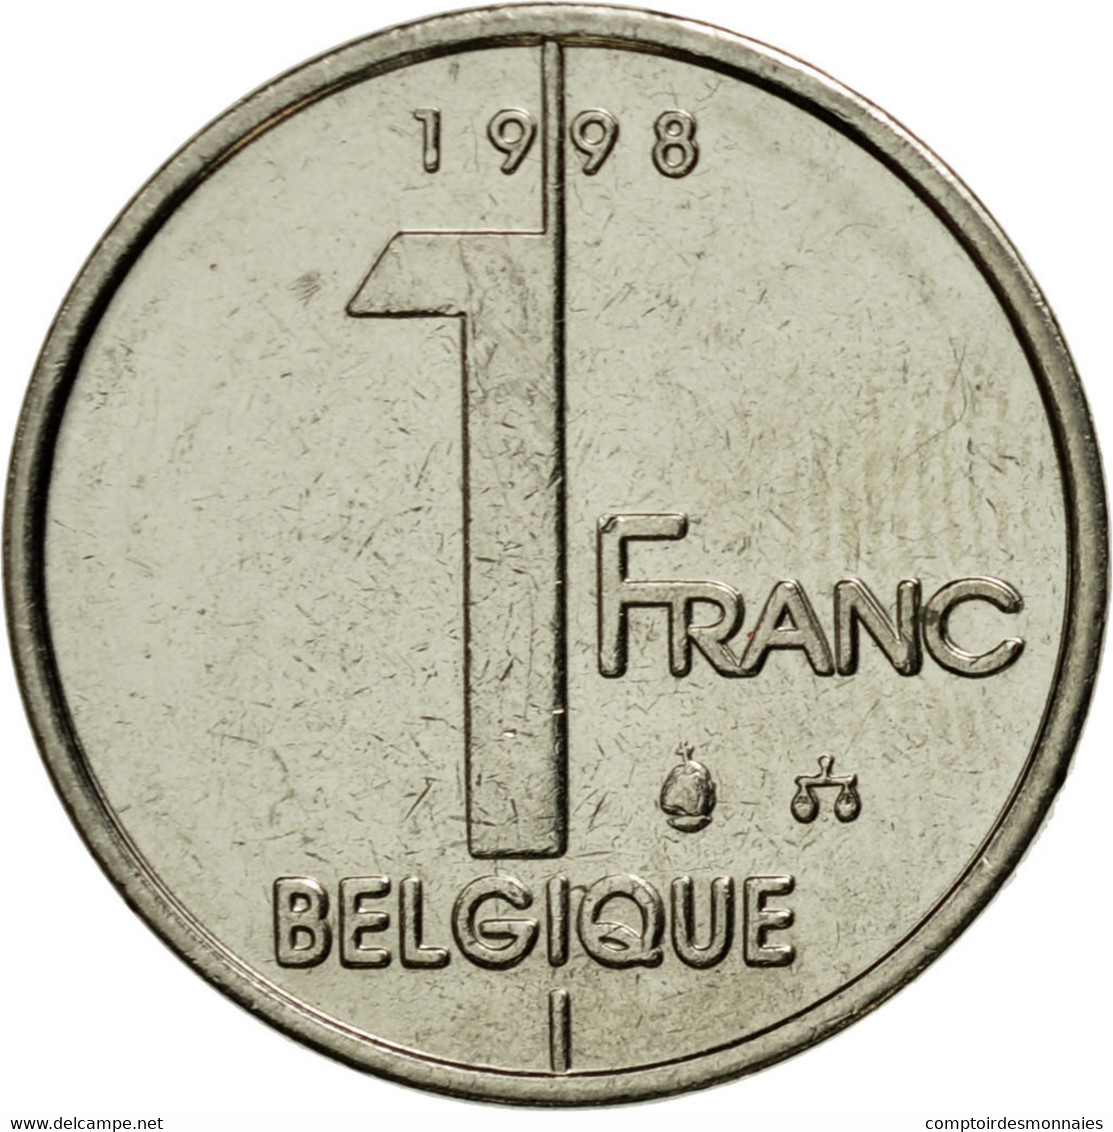 Monnaie, Belgique, Albert II, Franc, 1998, Bruxelles, SUP, Nickel Plated Iron - 1 Frank